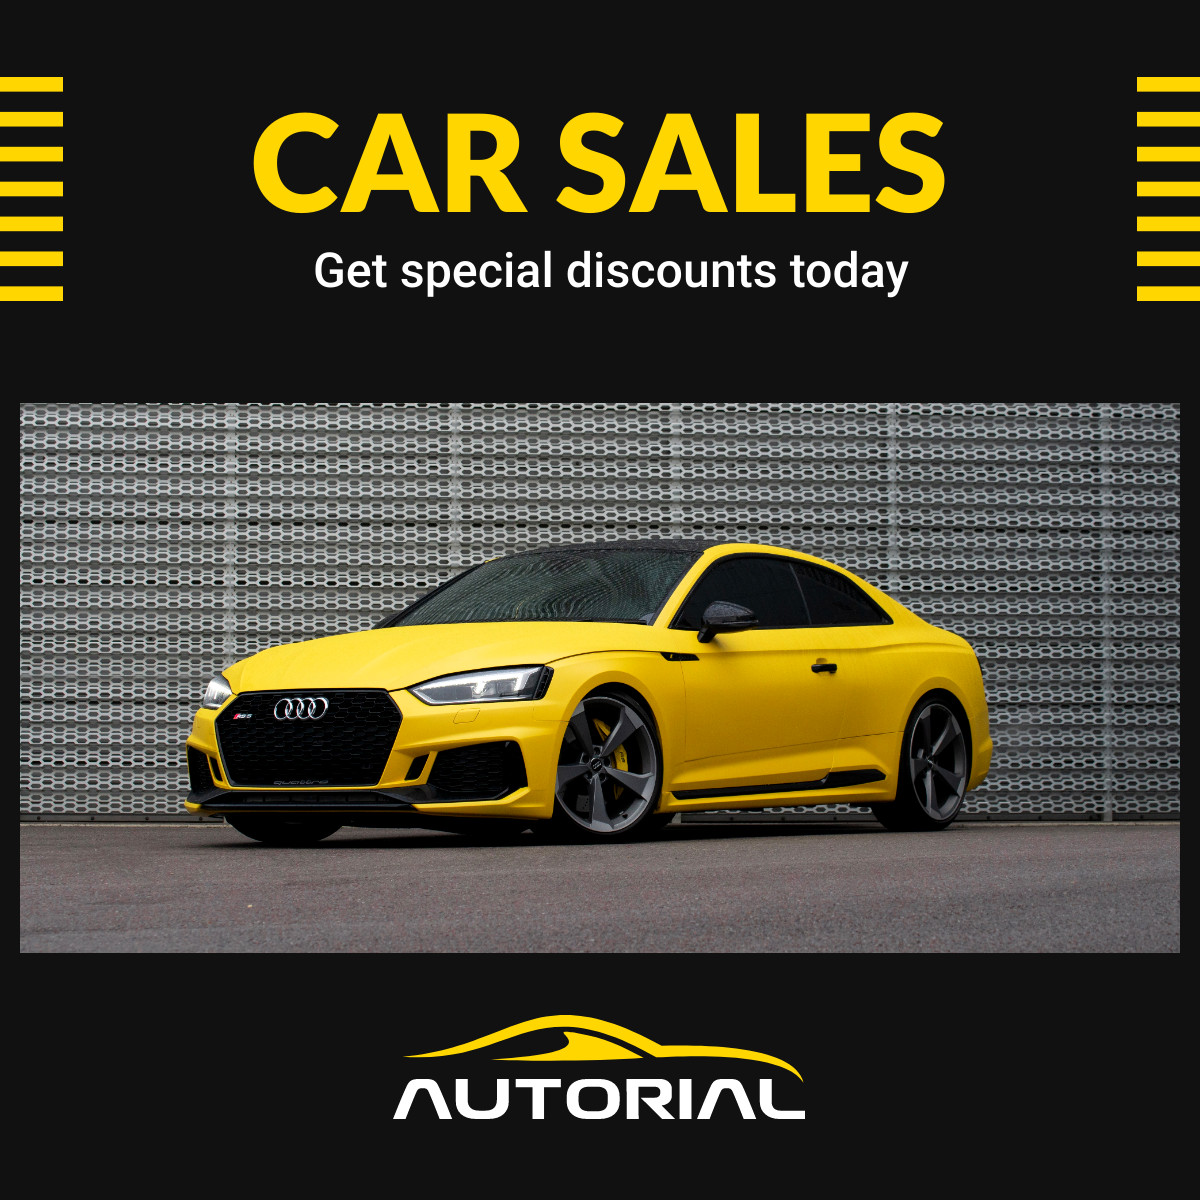 Special Car Sale Discounts